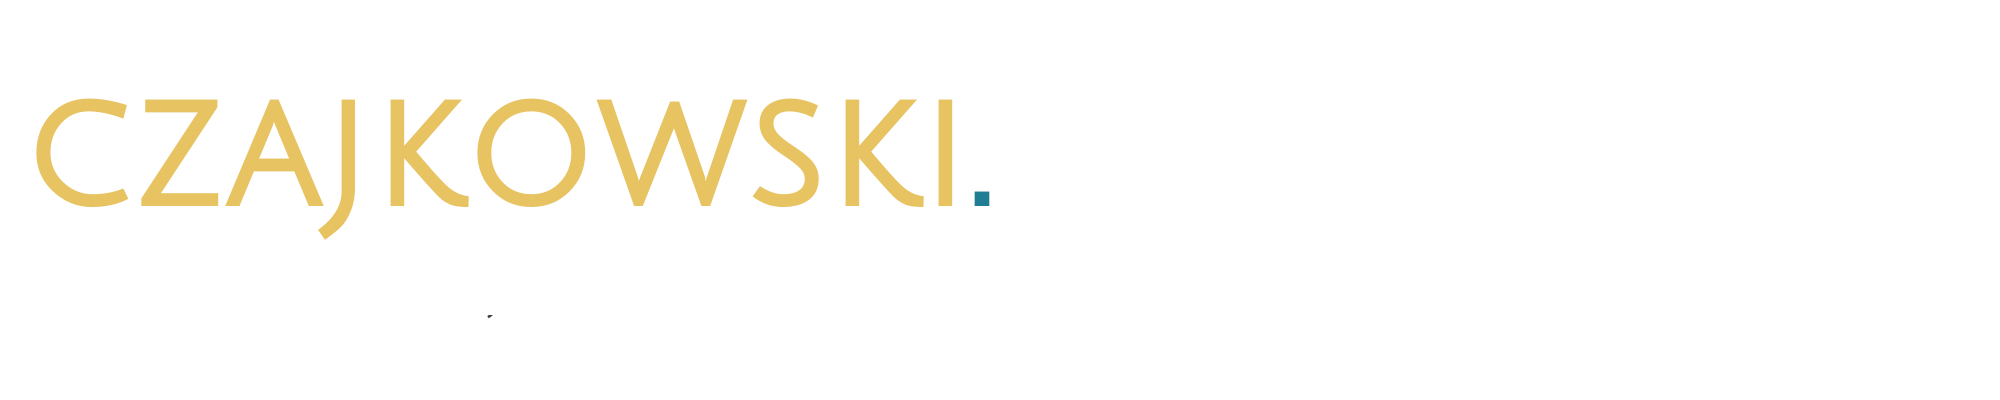 czajkowski.consulting logo